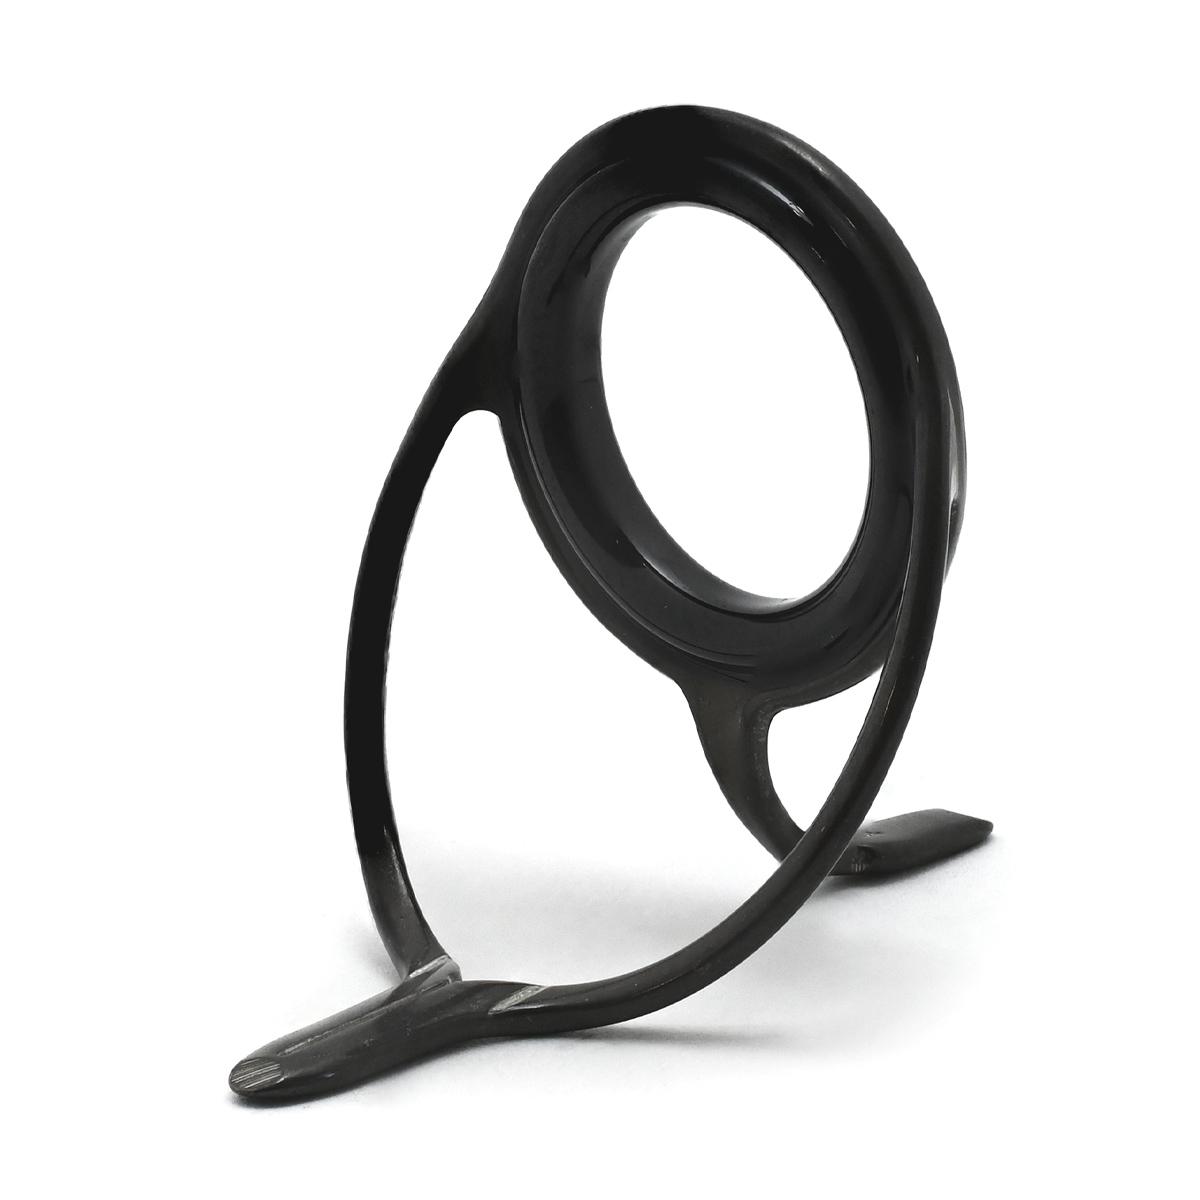 Fuji Alconite concept cclsvag Sizes Rod Rings Ring Set Ring rutenbau Blank 